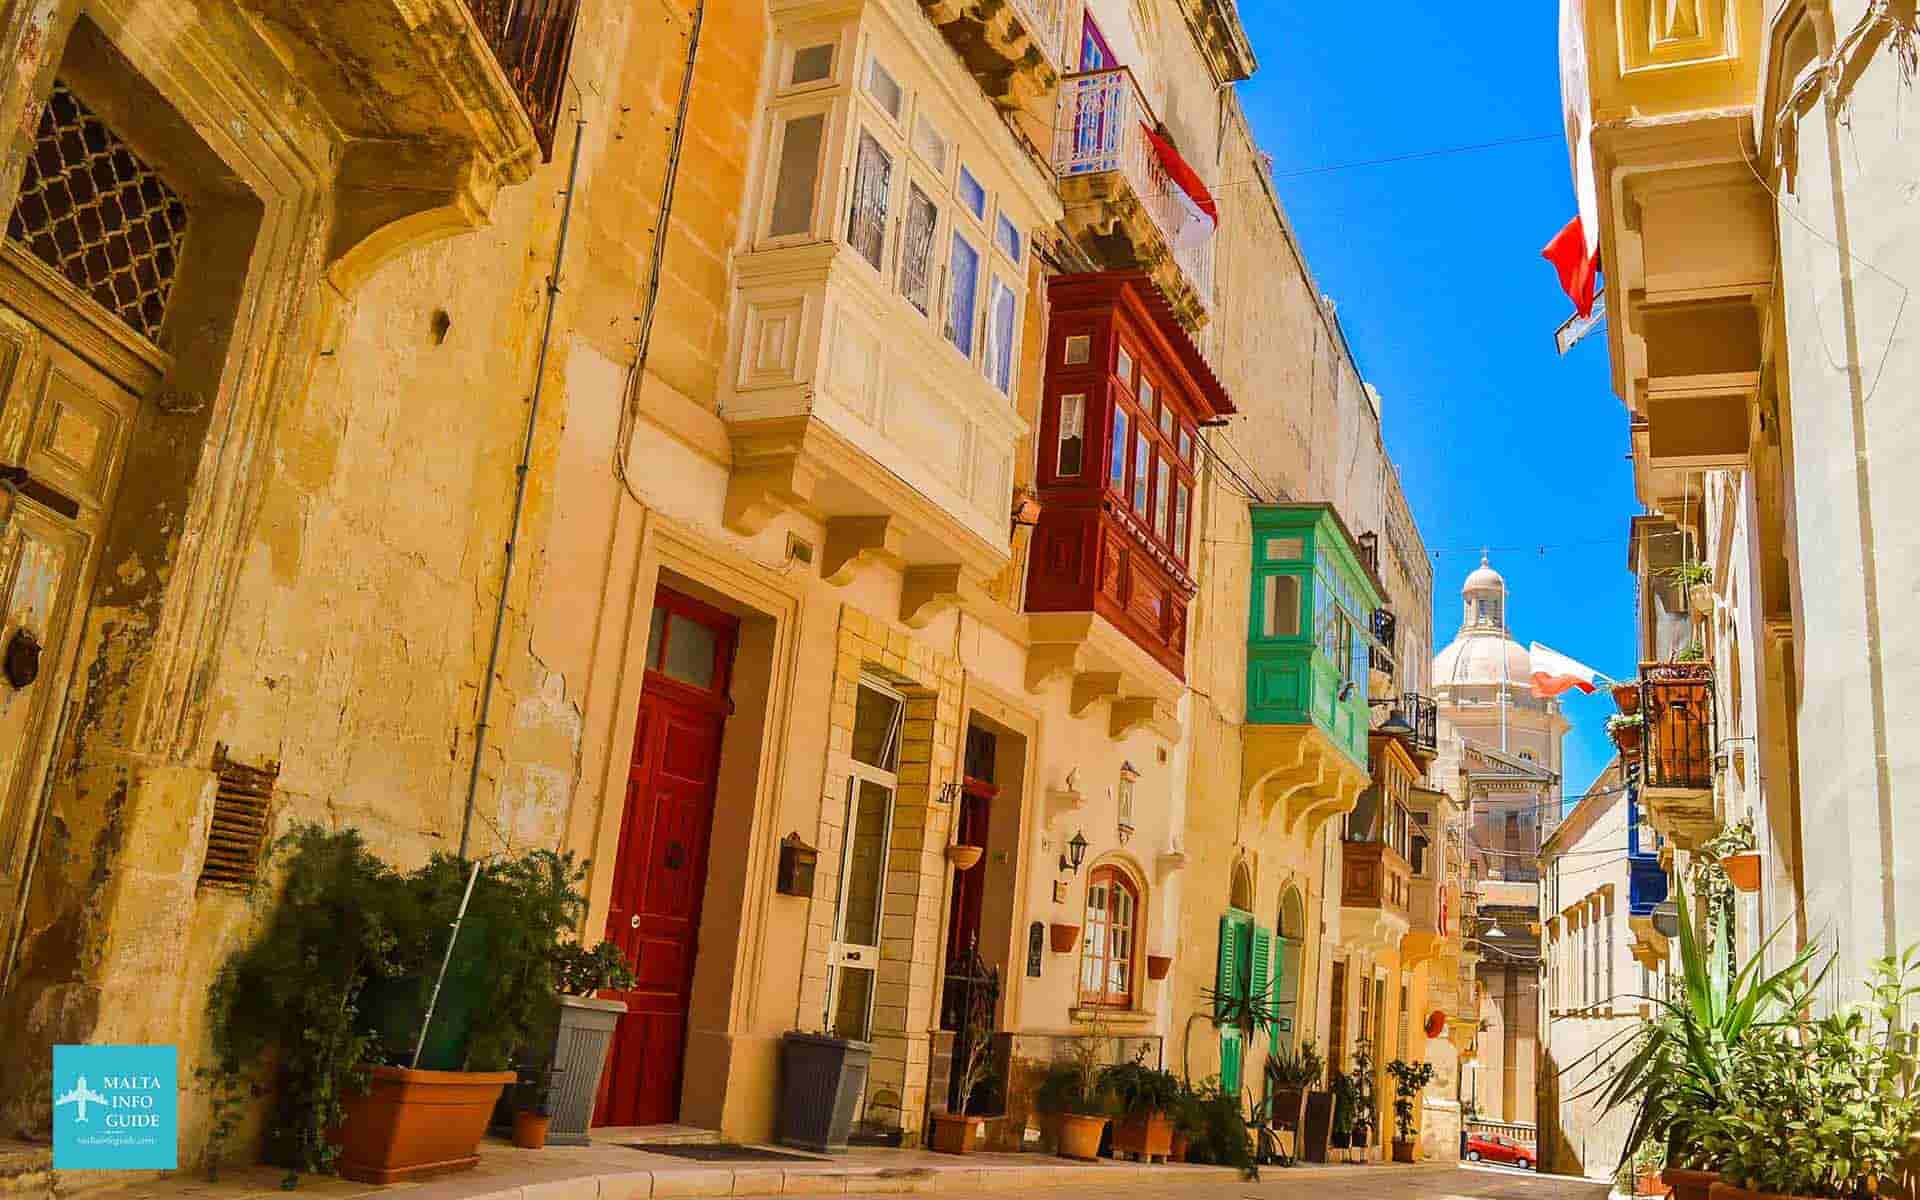 The beautiful narrow street in Birgu Malta.